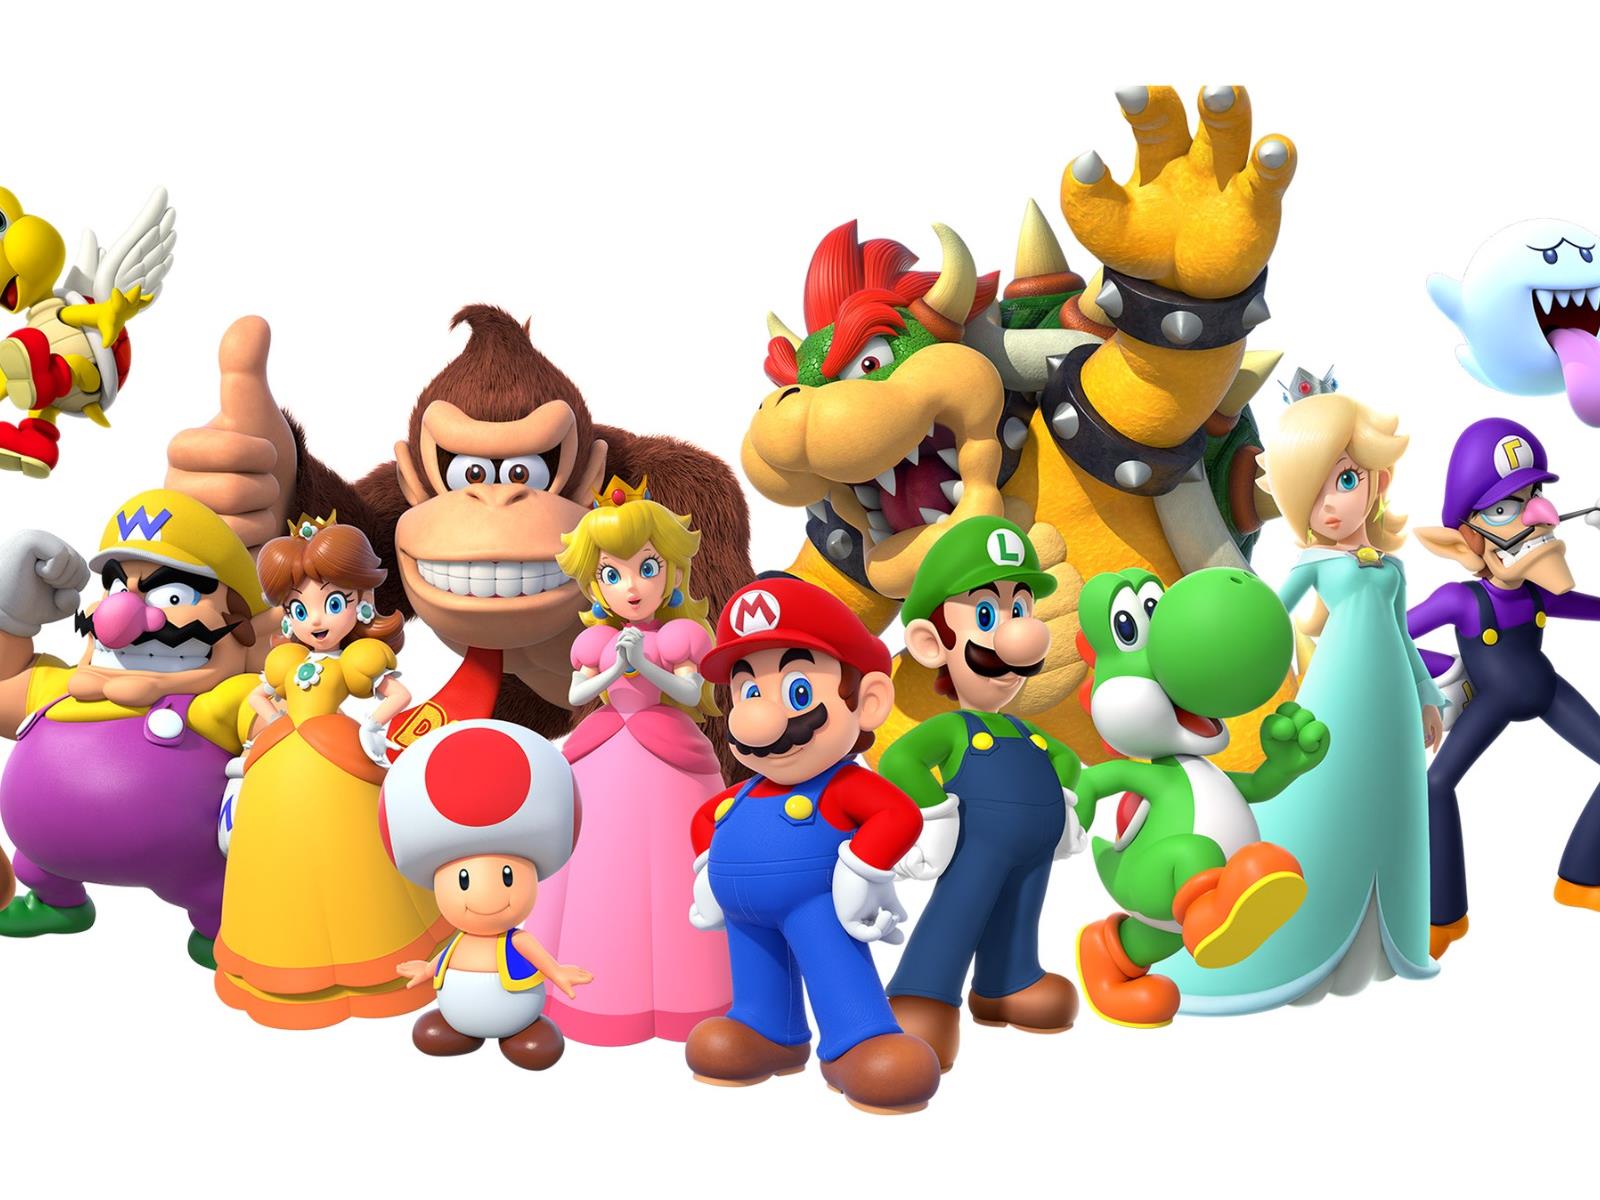 Shigeru Miyamoto announces the delay of the Super Mario Bros. movie